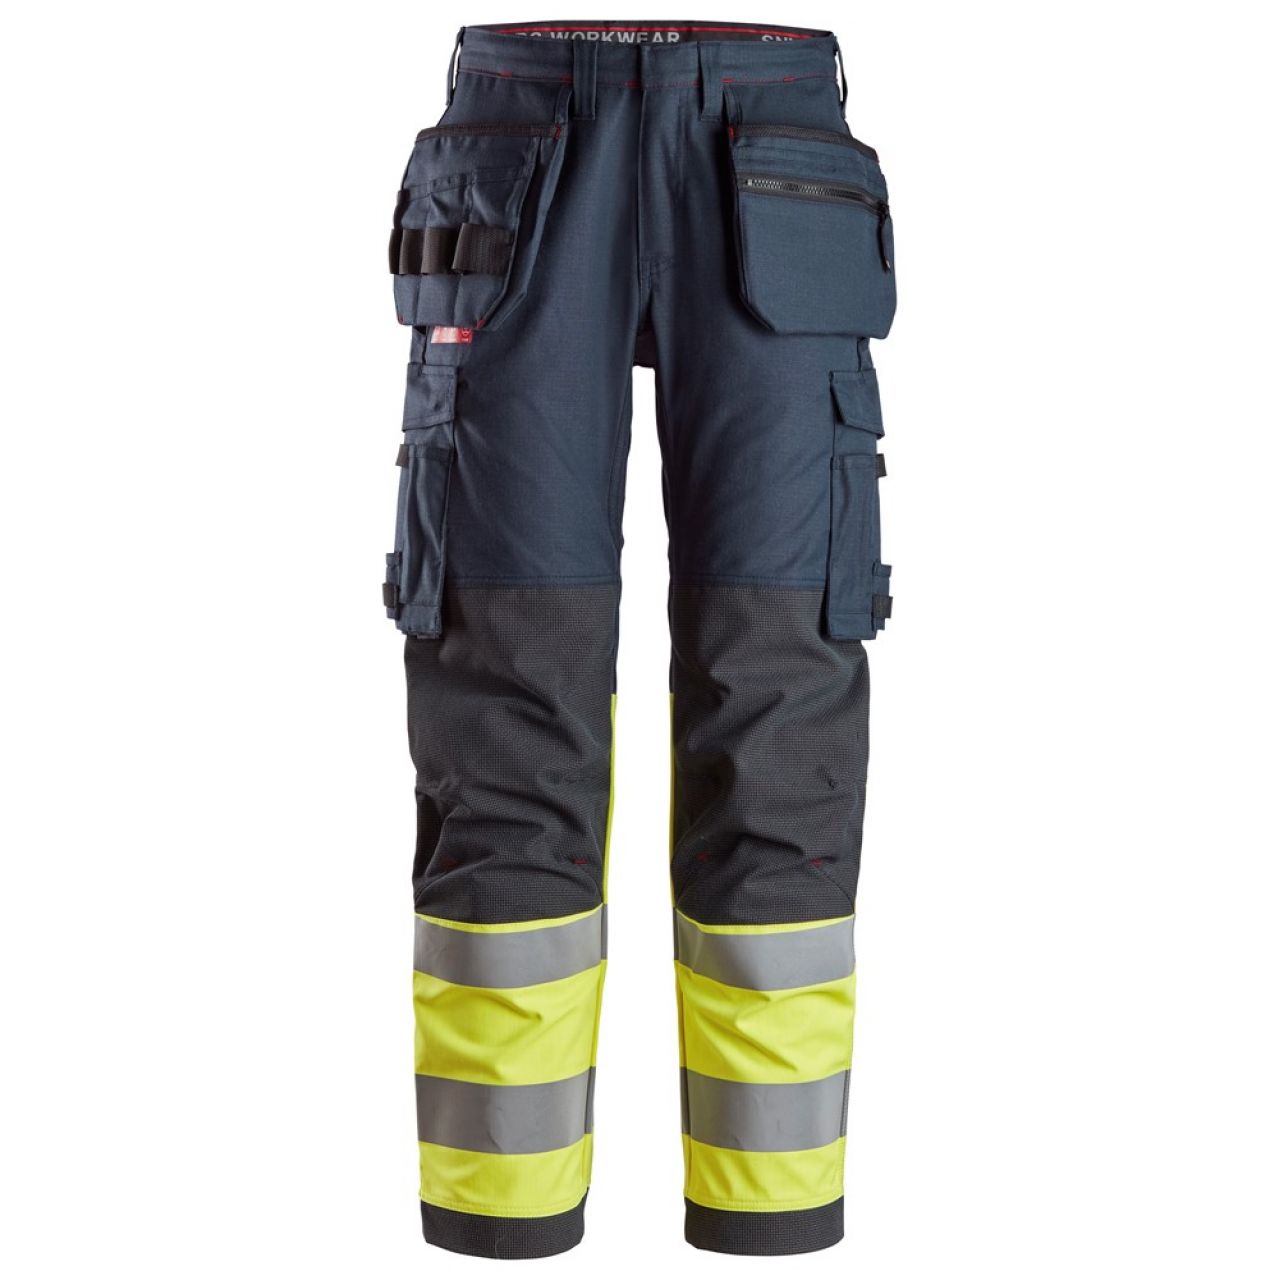 6263 Pantalones largos de trabajo de alta visibilidad clase 1 con bolsillos flotantes ProtecWork azul marino-amarillo talla 108